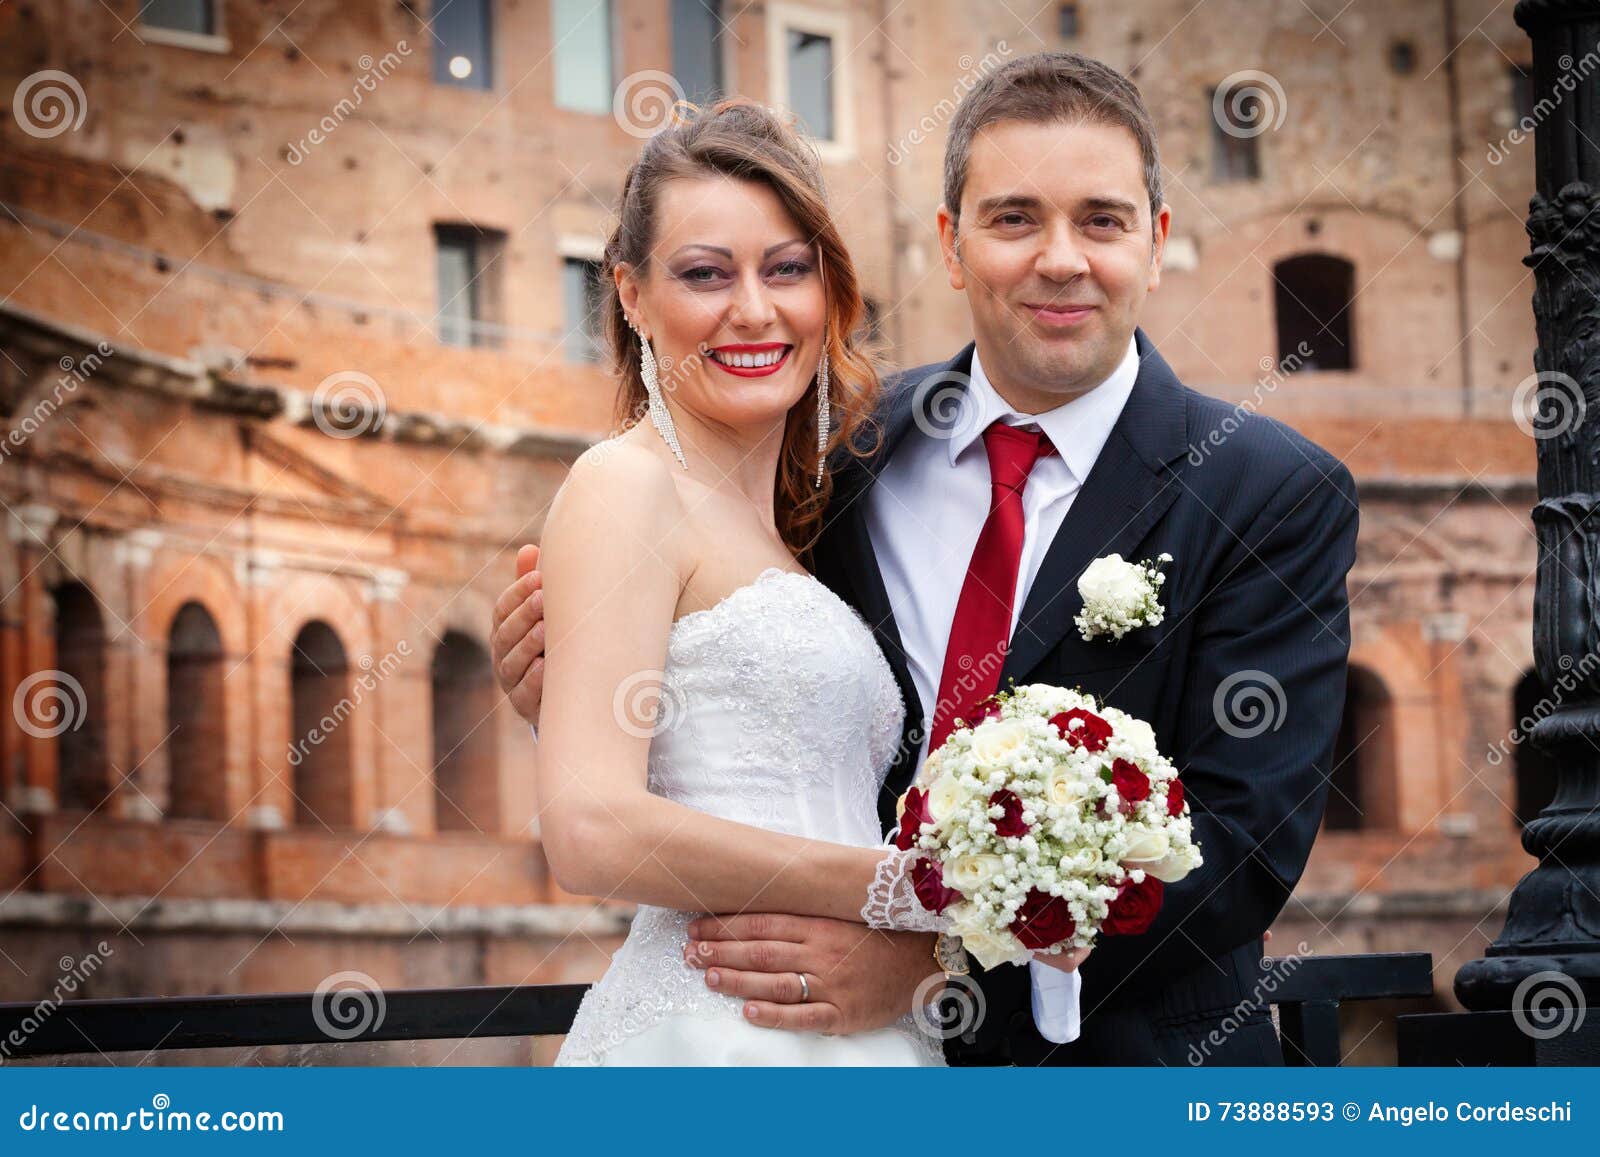 Husband And Wife Couple Marriage Newlyweds Stock Image